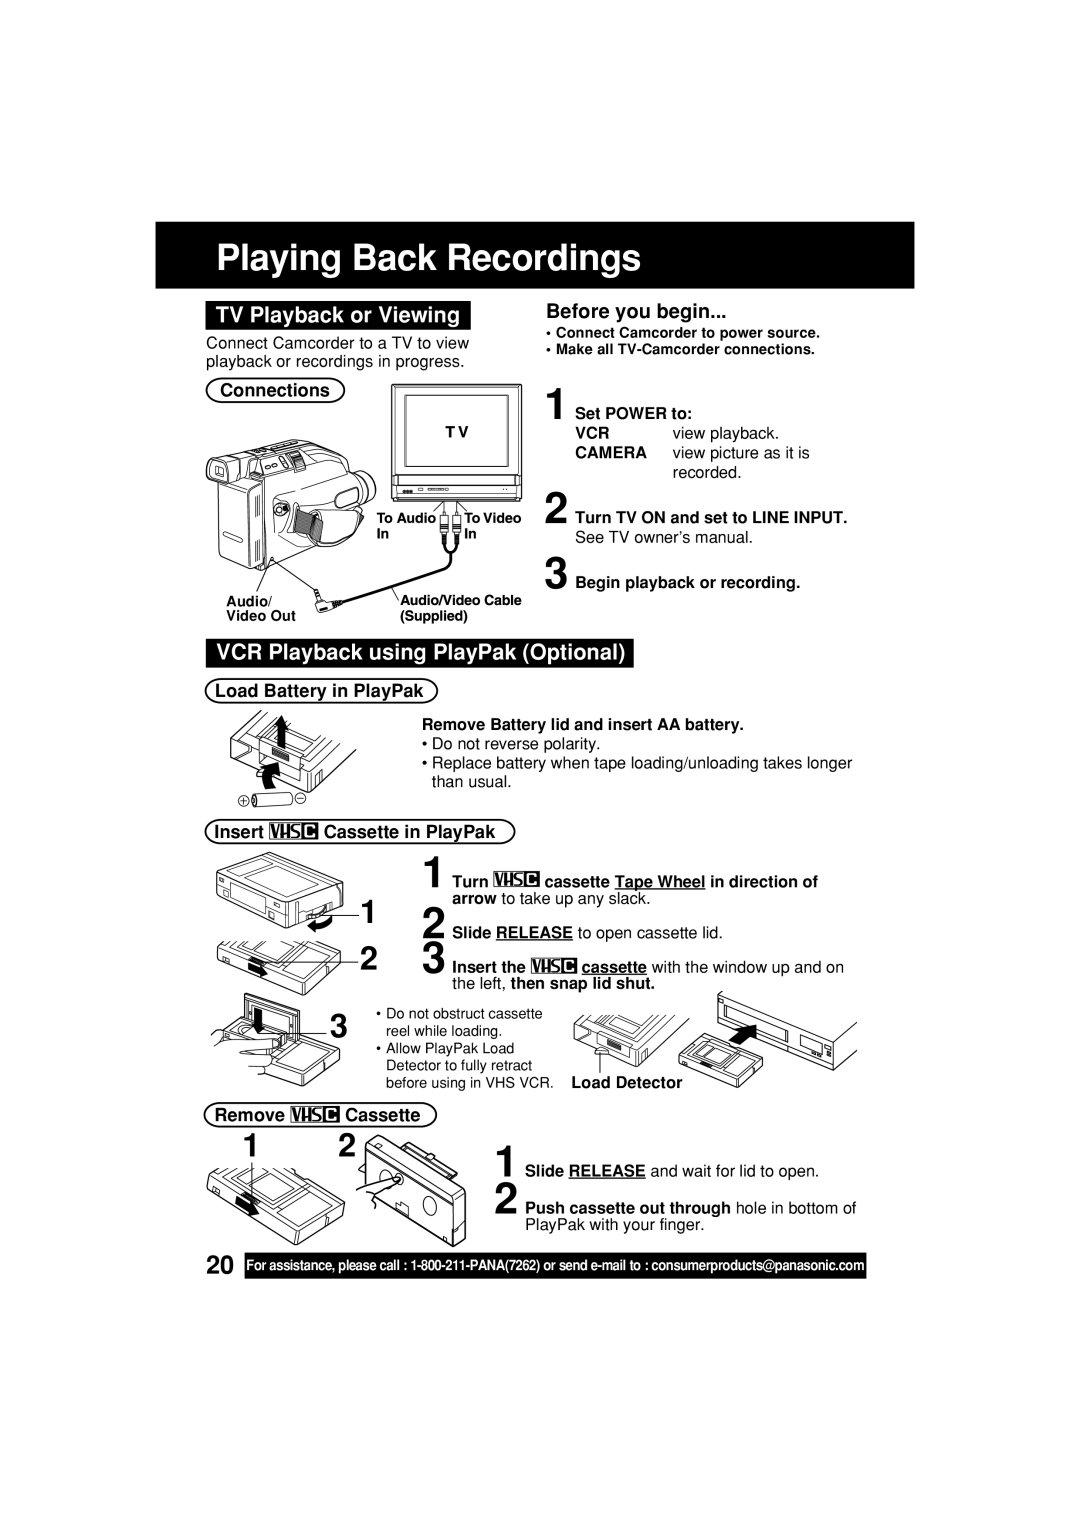 Panasonic VM-L153 operating instructions TV Playback or Viewing, VCR Playback using PlayPak Optional 